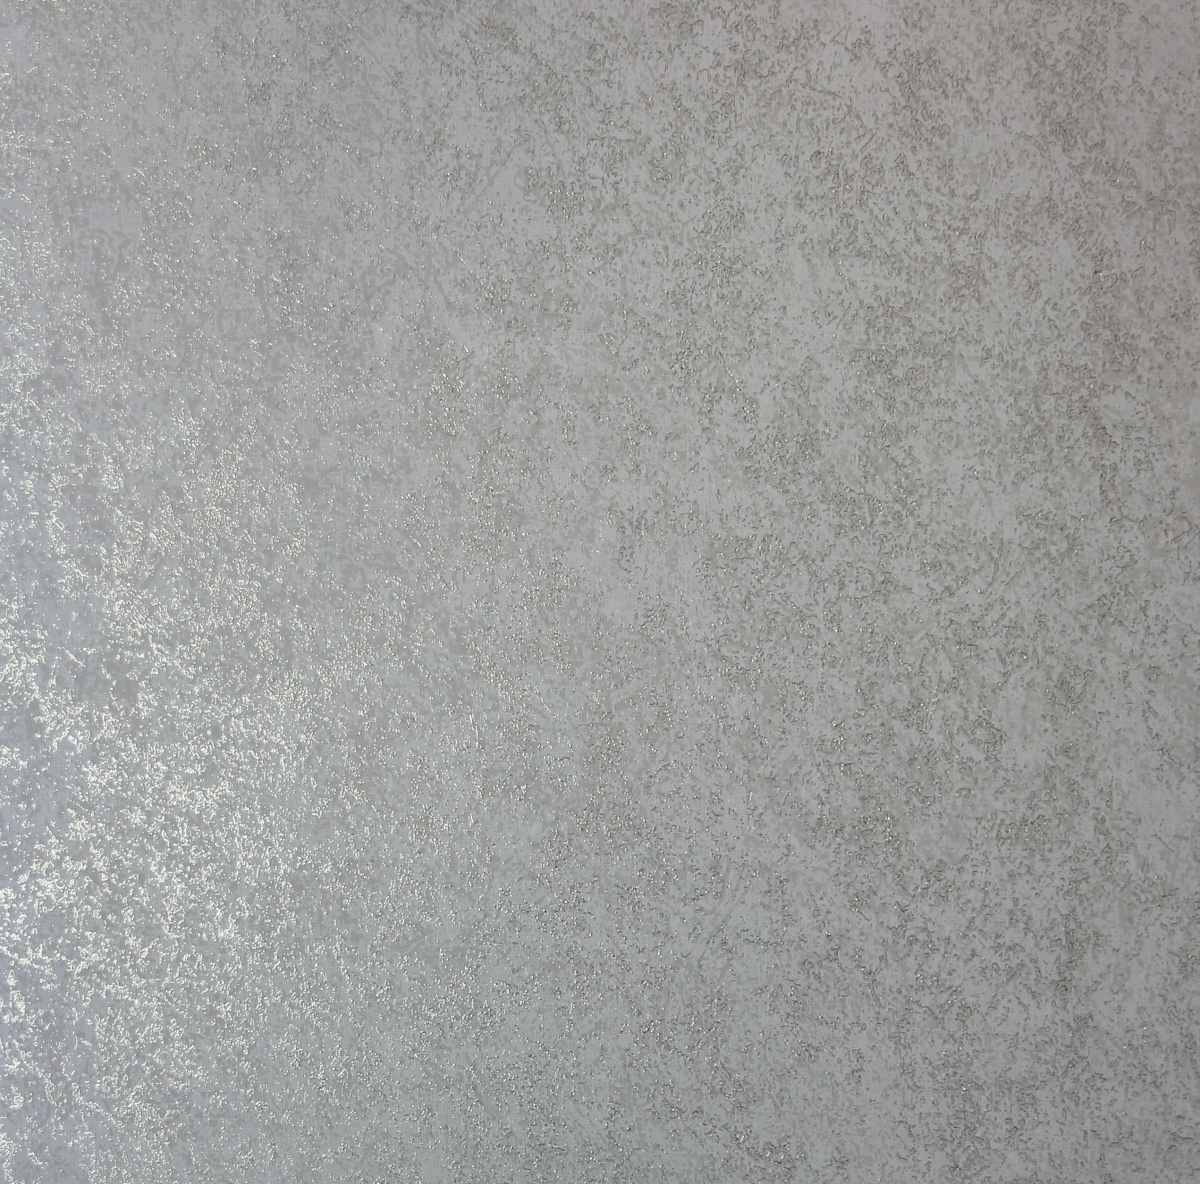 903207 Texture Kiss Foil Non-woven Wallpaper, Rose Gold